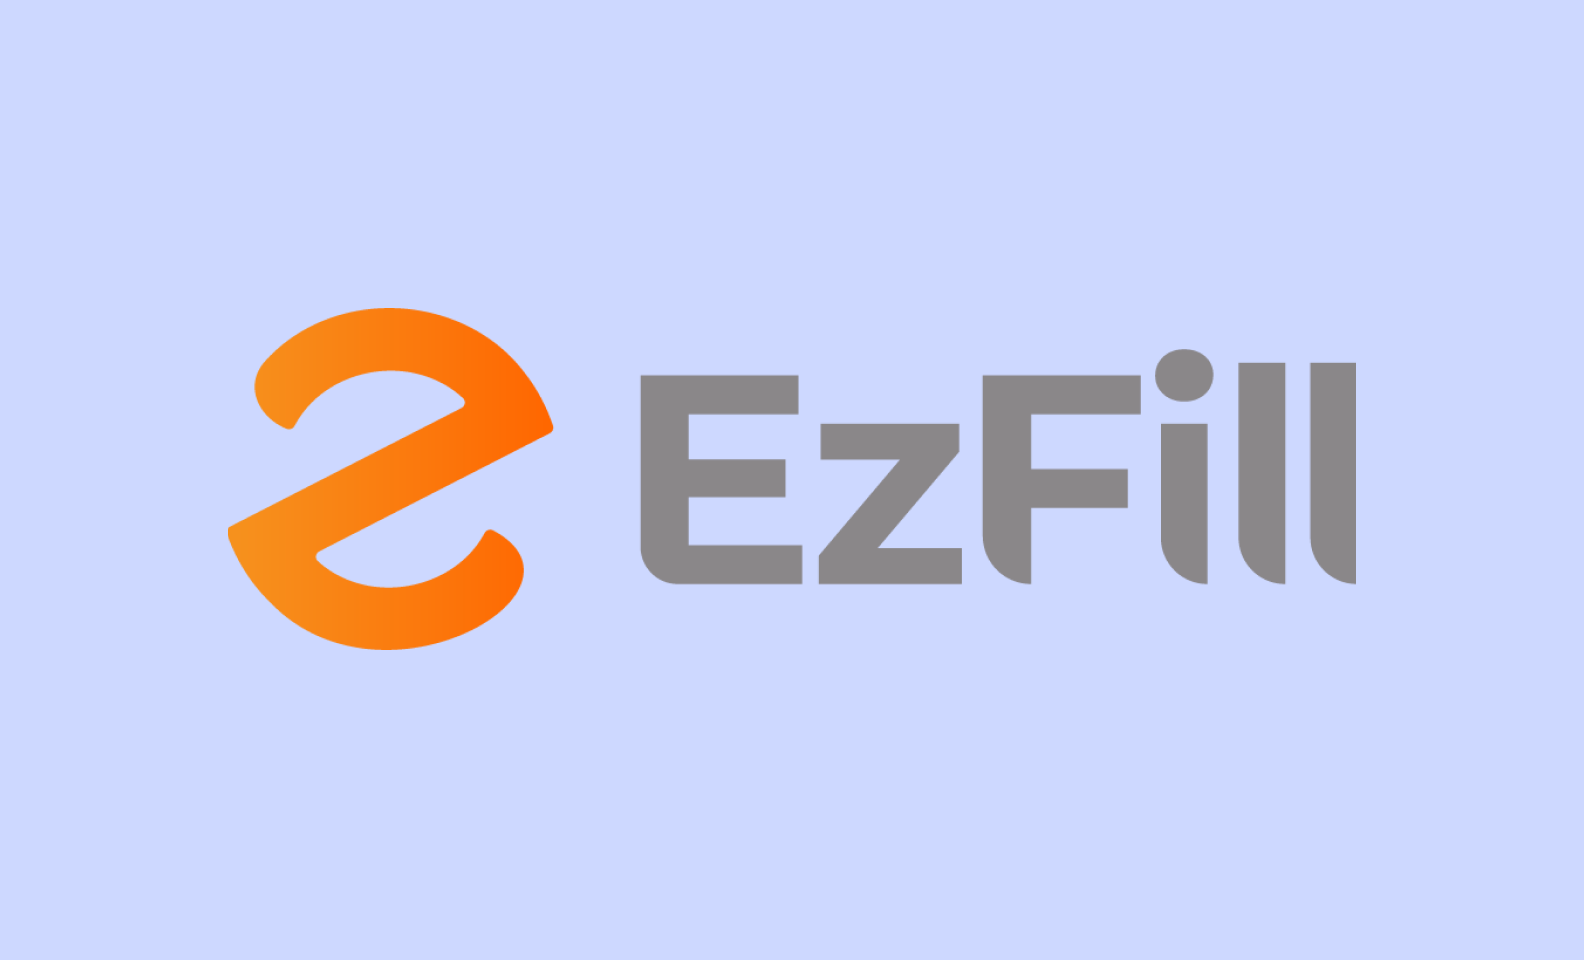 EZFill’s logo